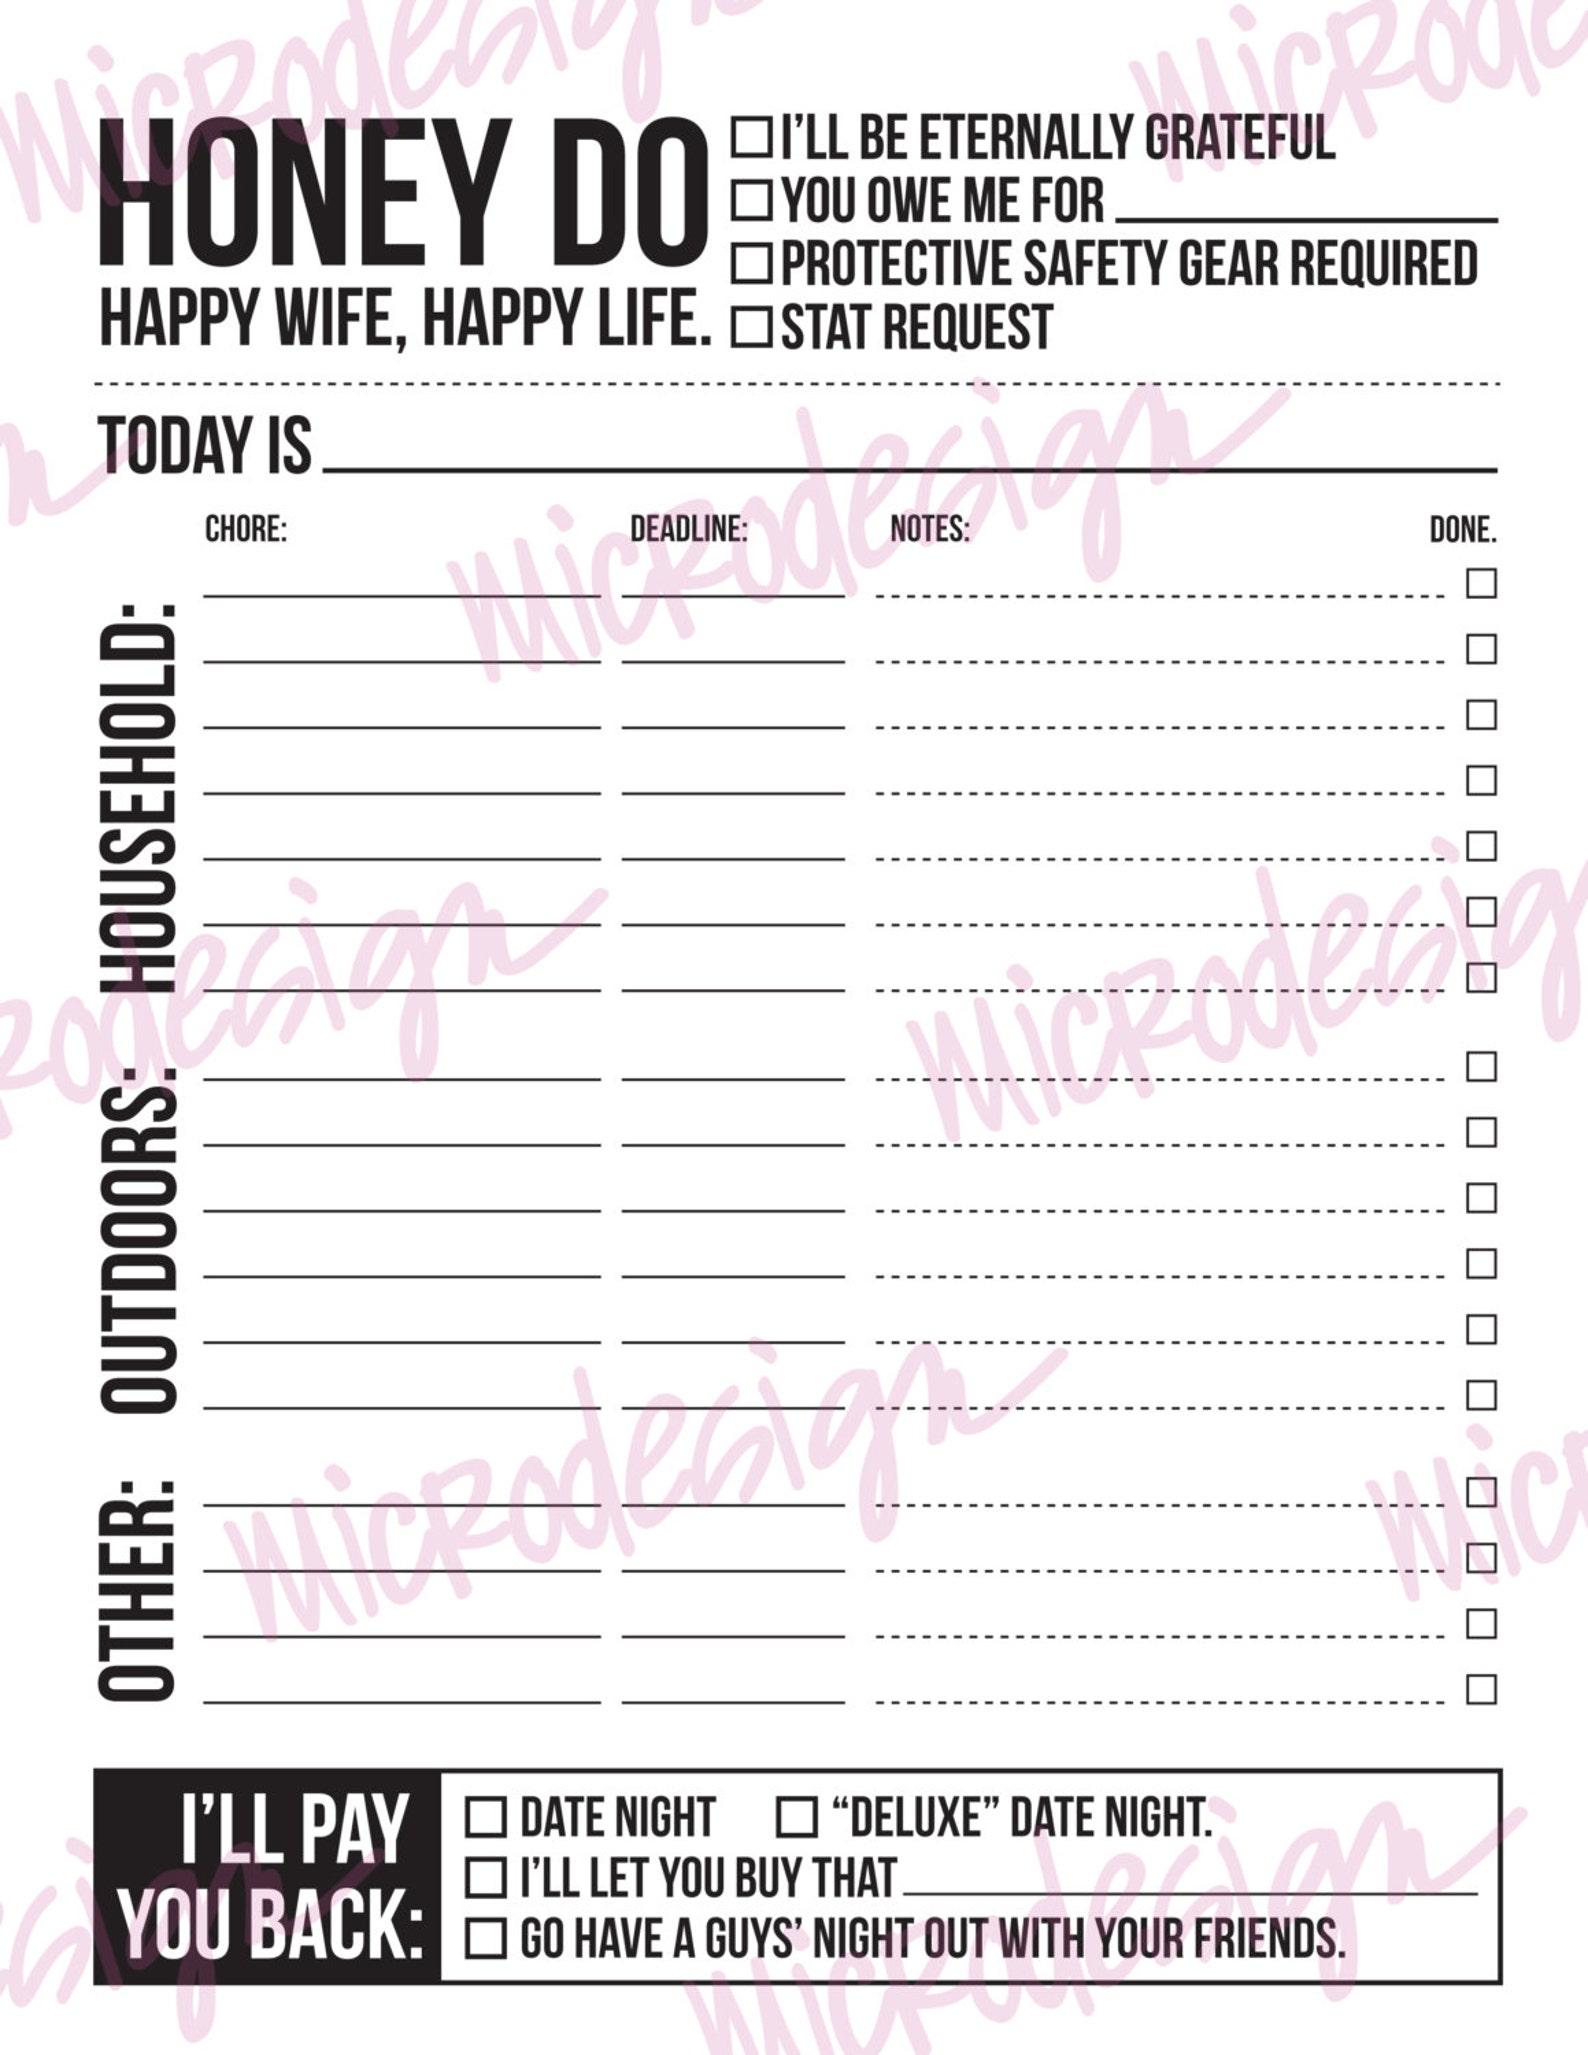 Instant Download Printable Sheet: Honey Do List - Etsy